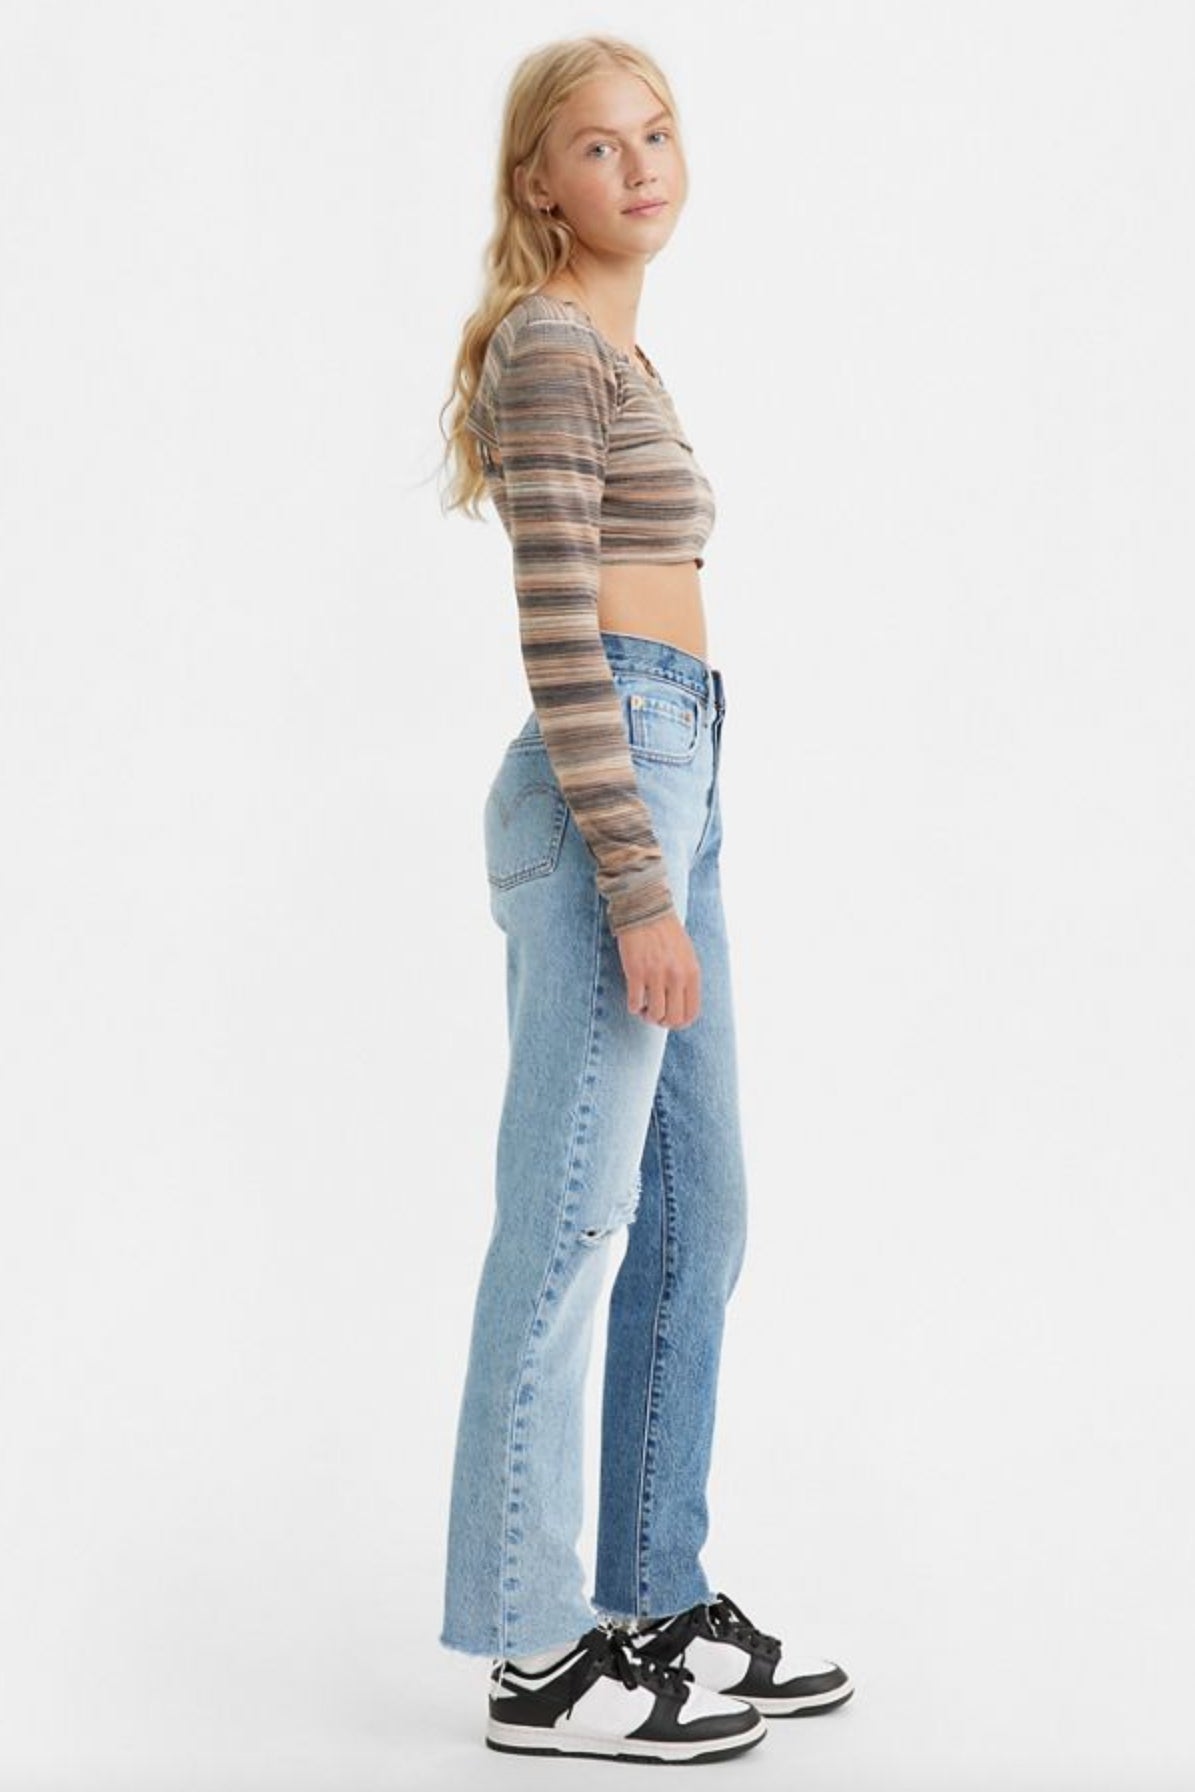 Levi's 501 Women's Two Tone Jeans